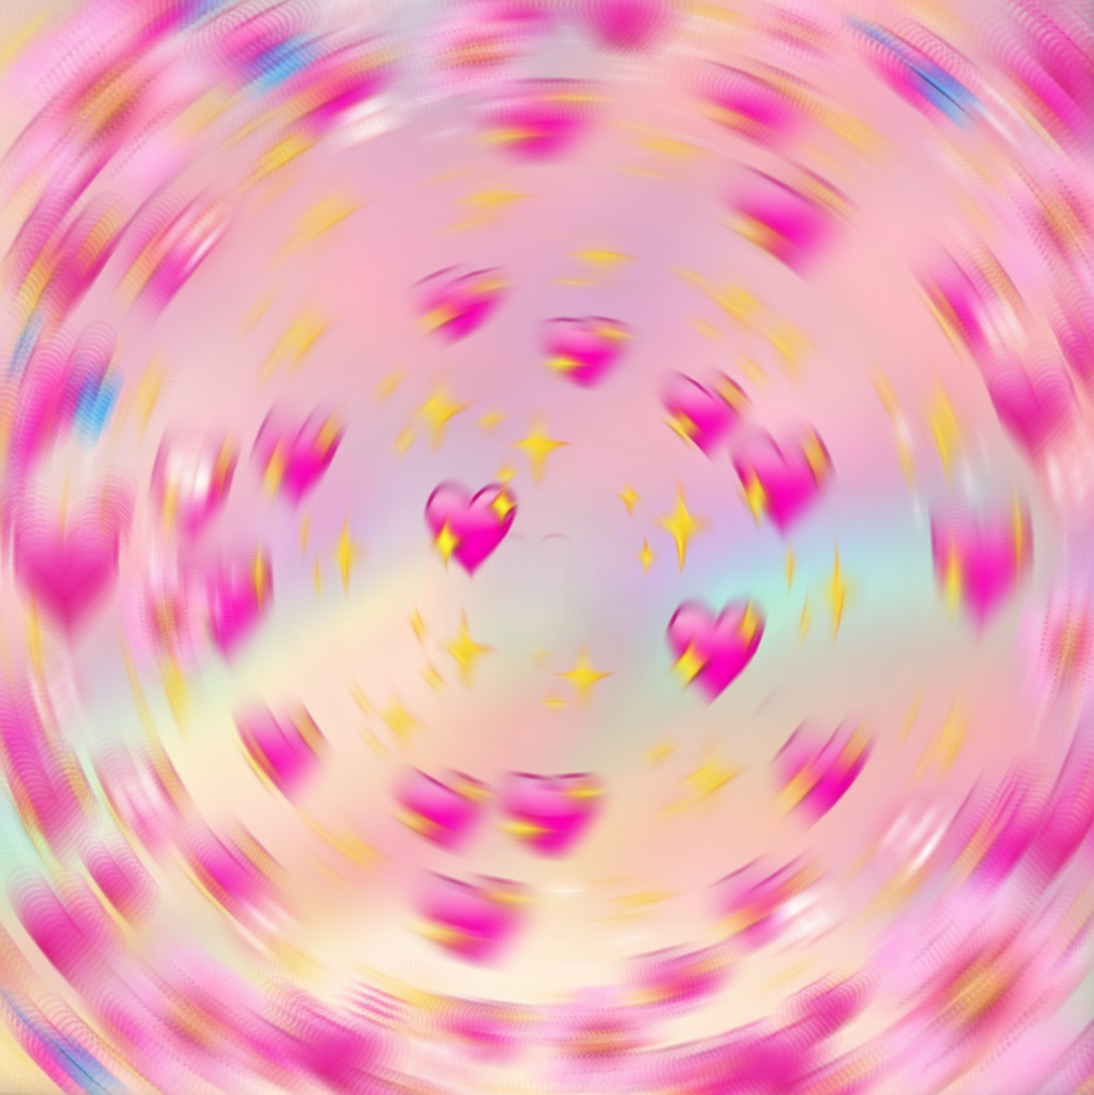 Free Background For Edits ? - Blurred Heart Emoji Background - 1094x1095  Wallpaper 